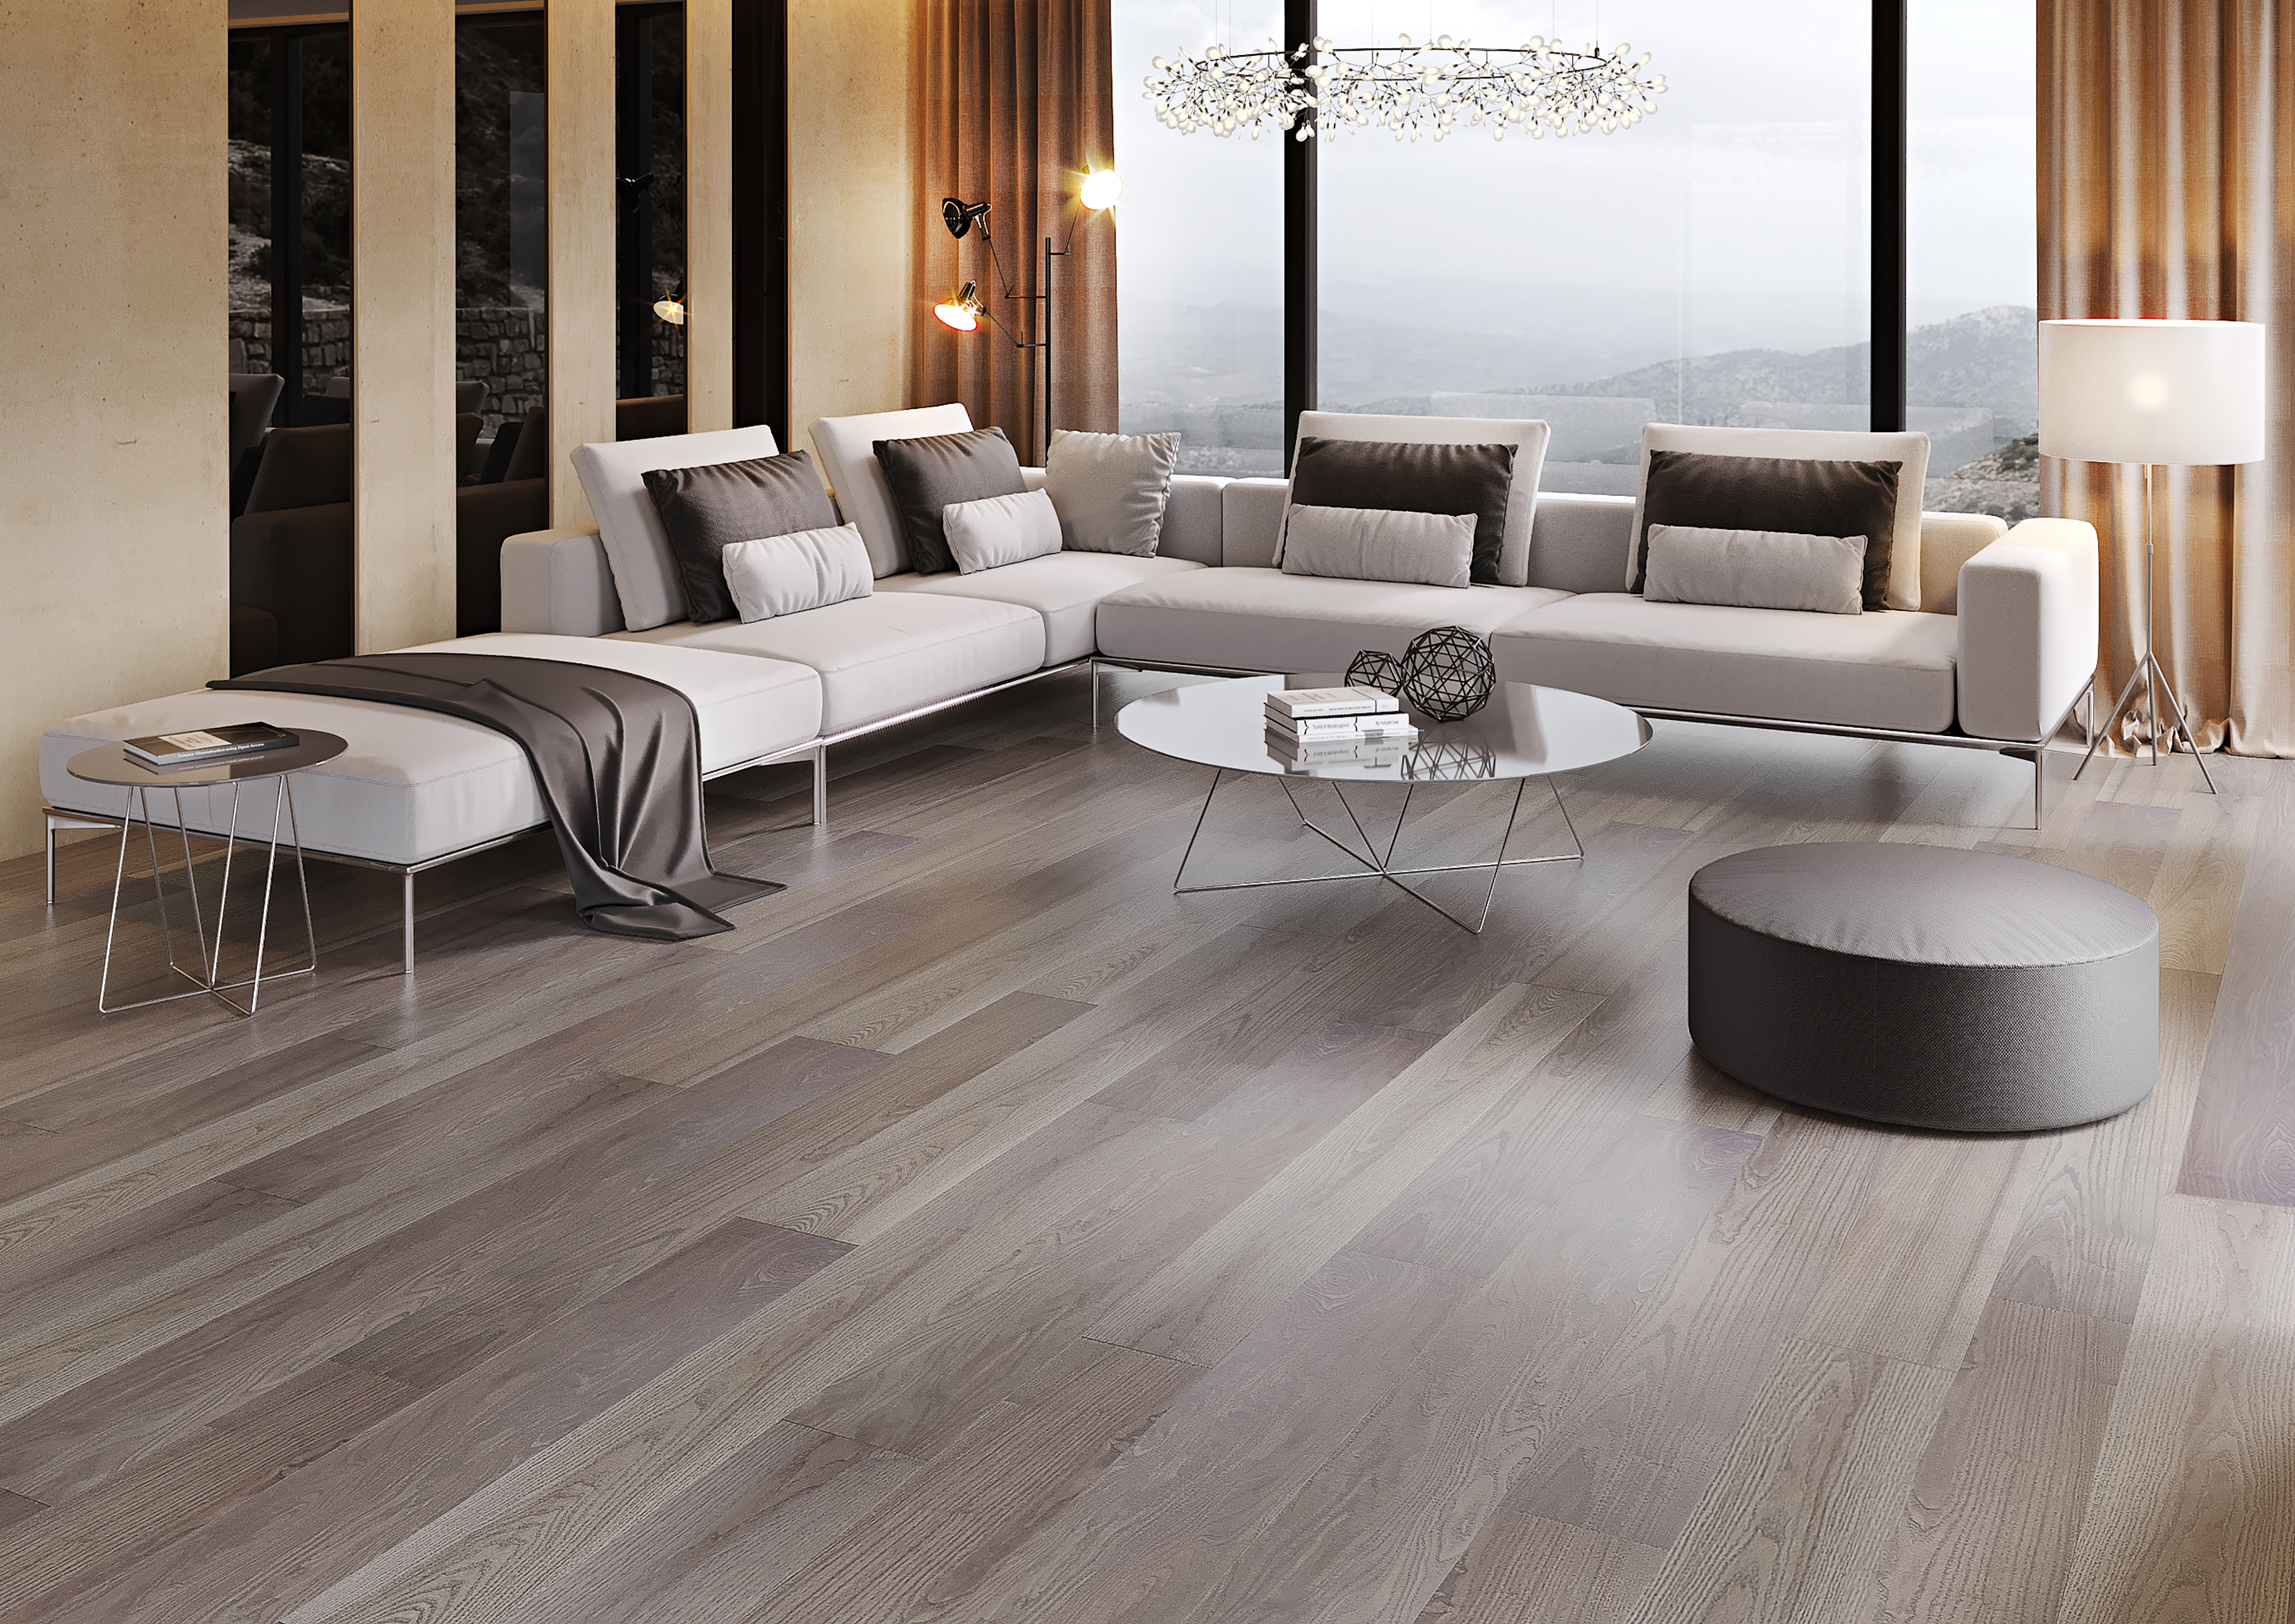 Hardwood Flooring Dark Vs Light, Light Hardwood Floors With Dark Furniture